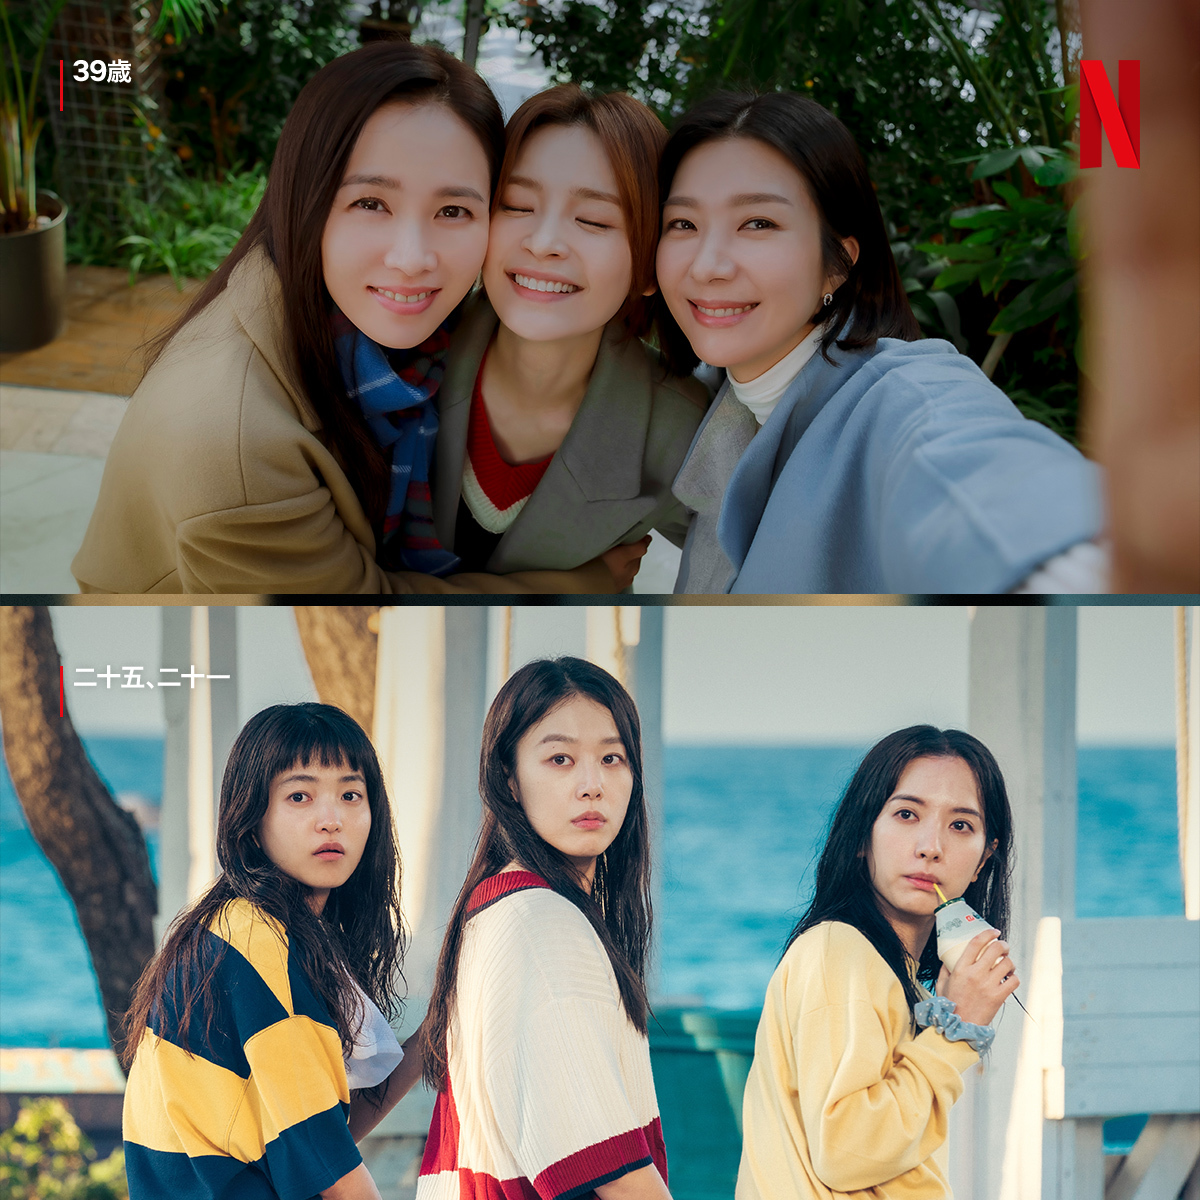 Netflix Japan ネットフリックス 3人の友情は永遠 39歳 二十五二十一 T Co Rgtow10wxz Twitter